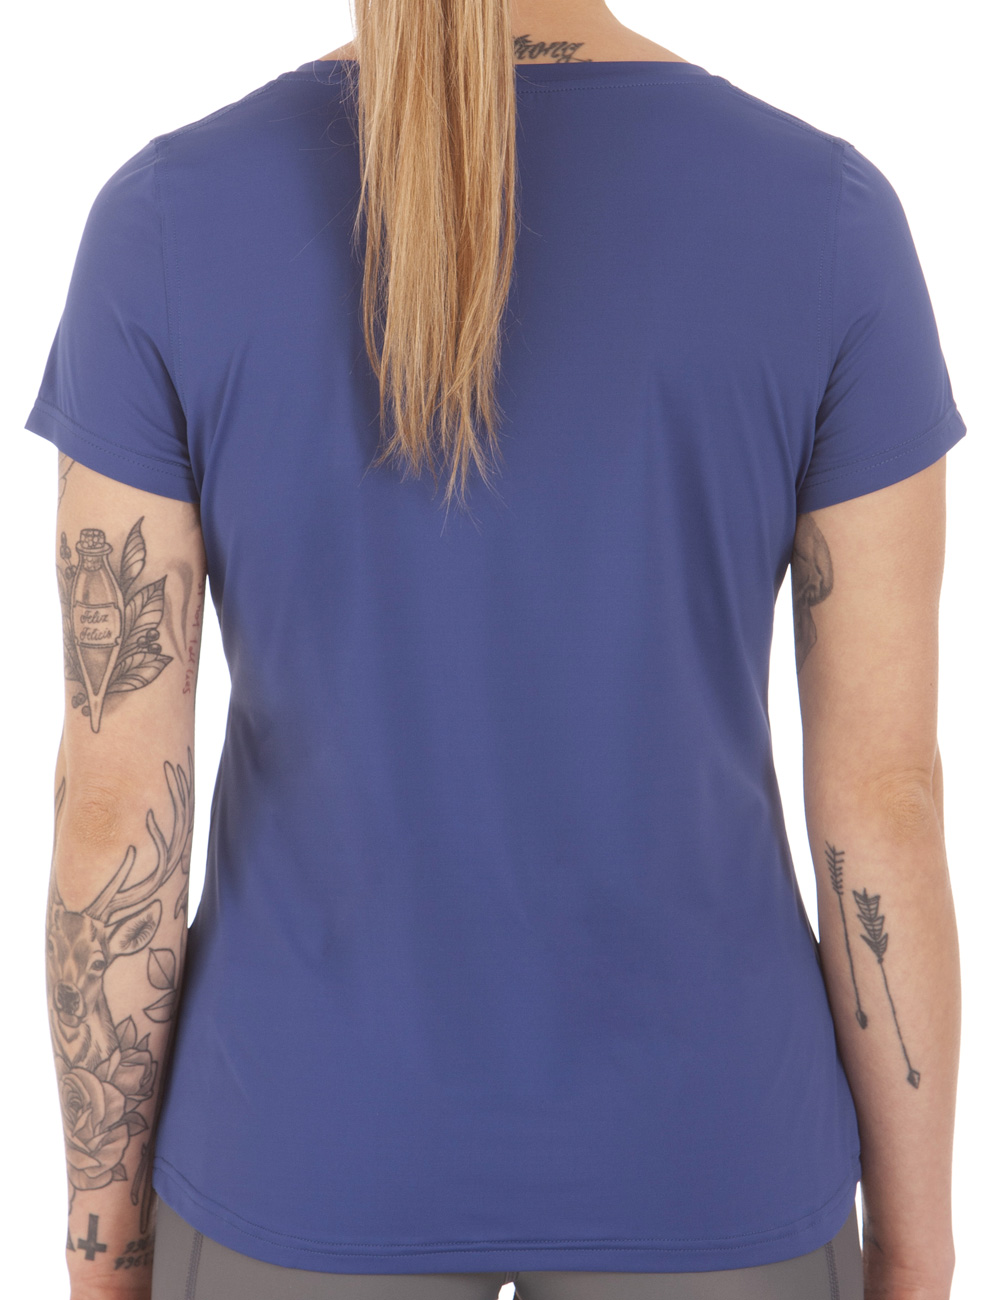 UV FREE Weitsicht shirt kurzarm blau back